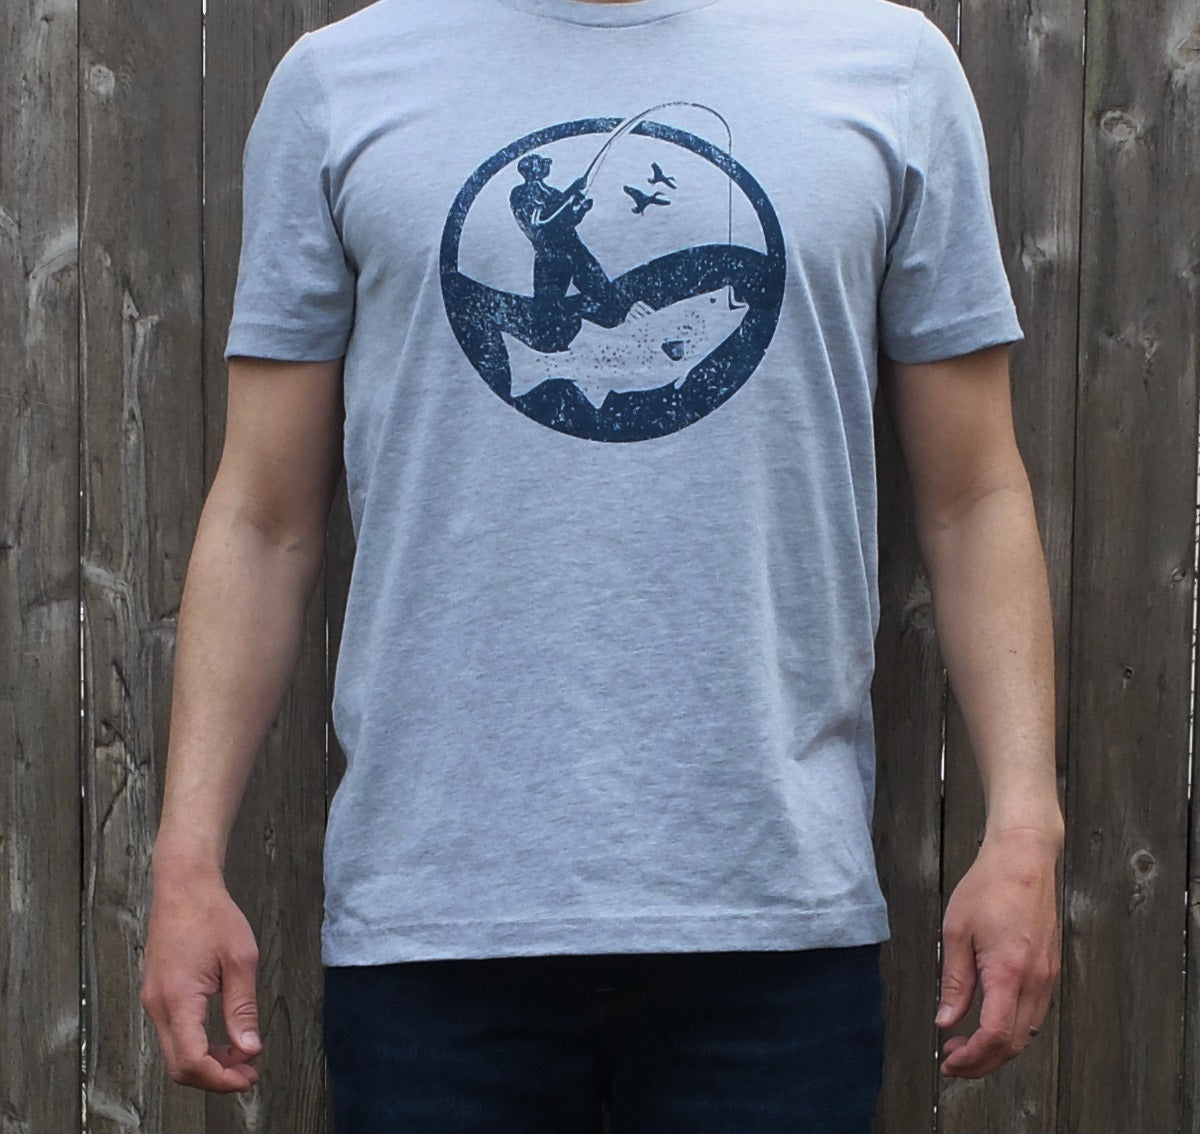 man wearing heather grey t-shirt with round navy blue surf fisherman logo graphic